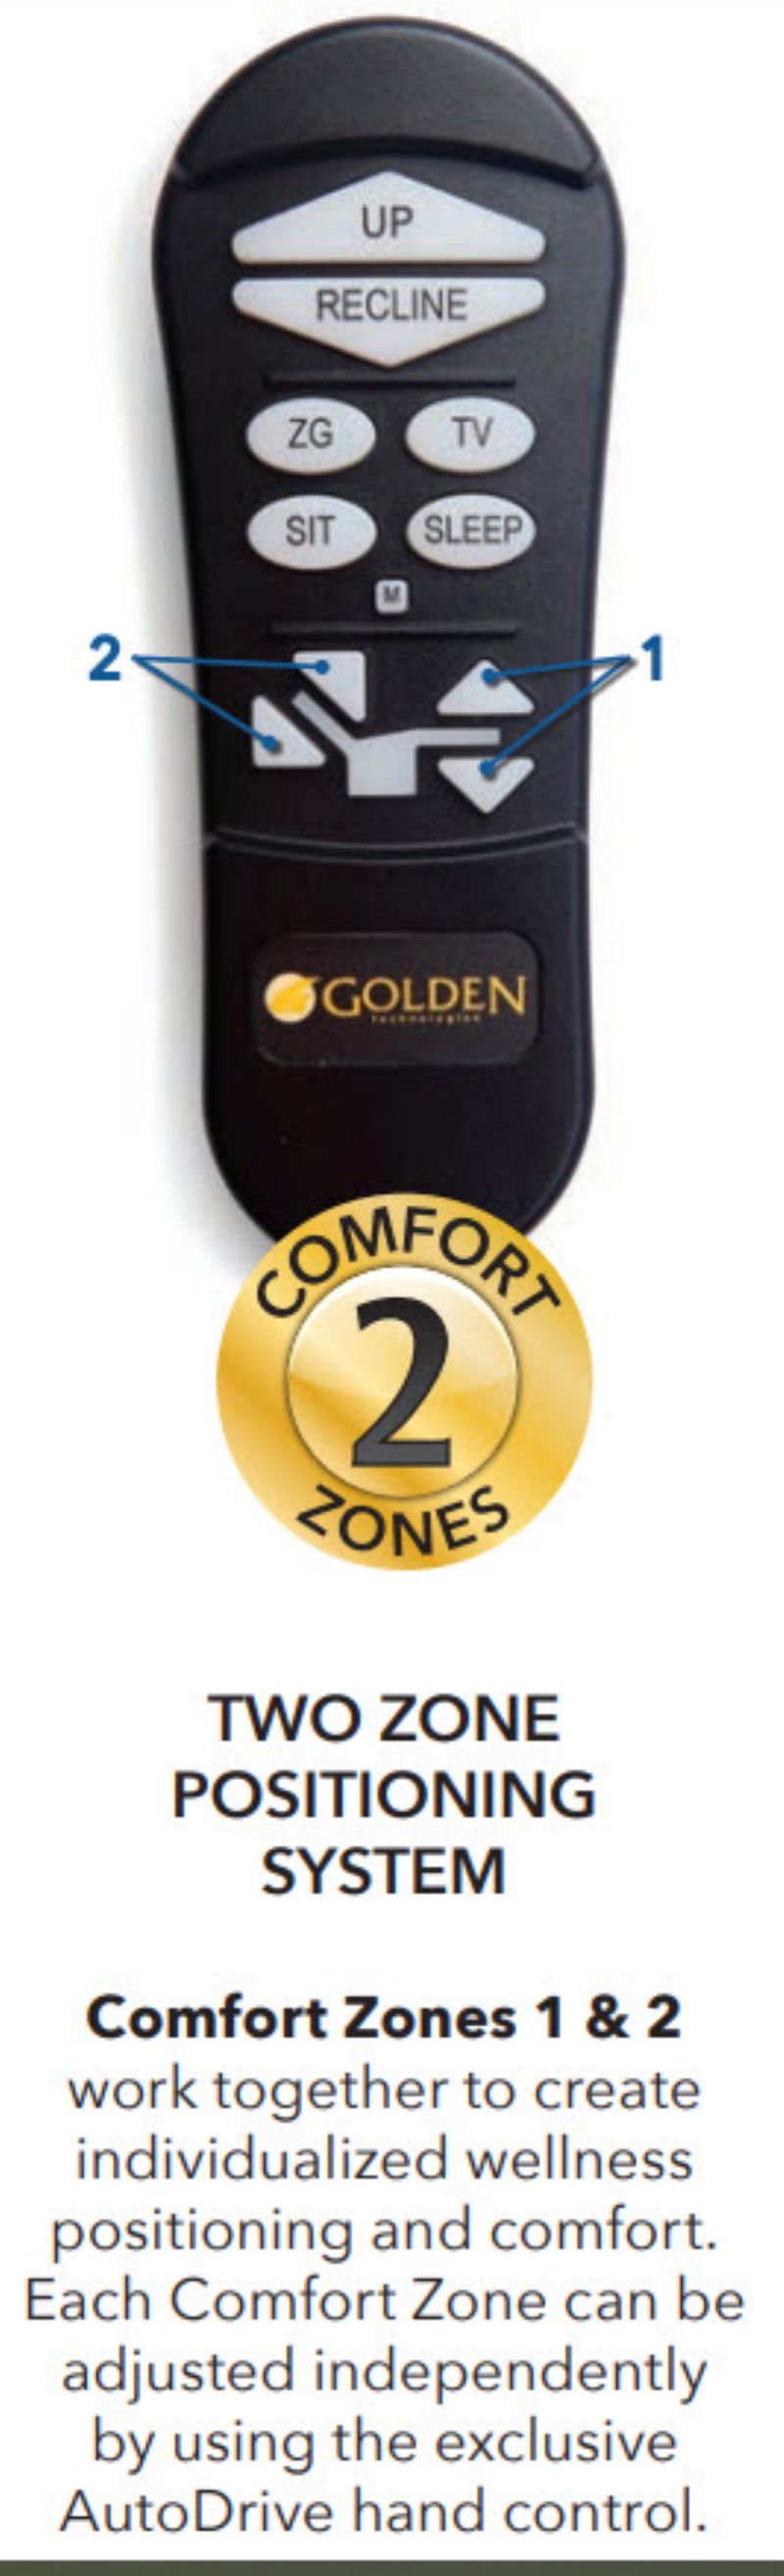 Golden Technologies Lift Chair - MaxiComforter Power Recliners Picture